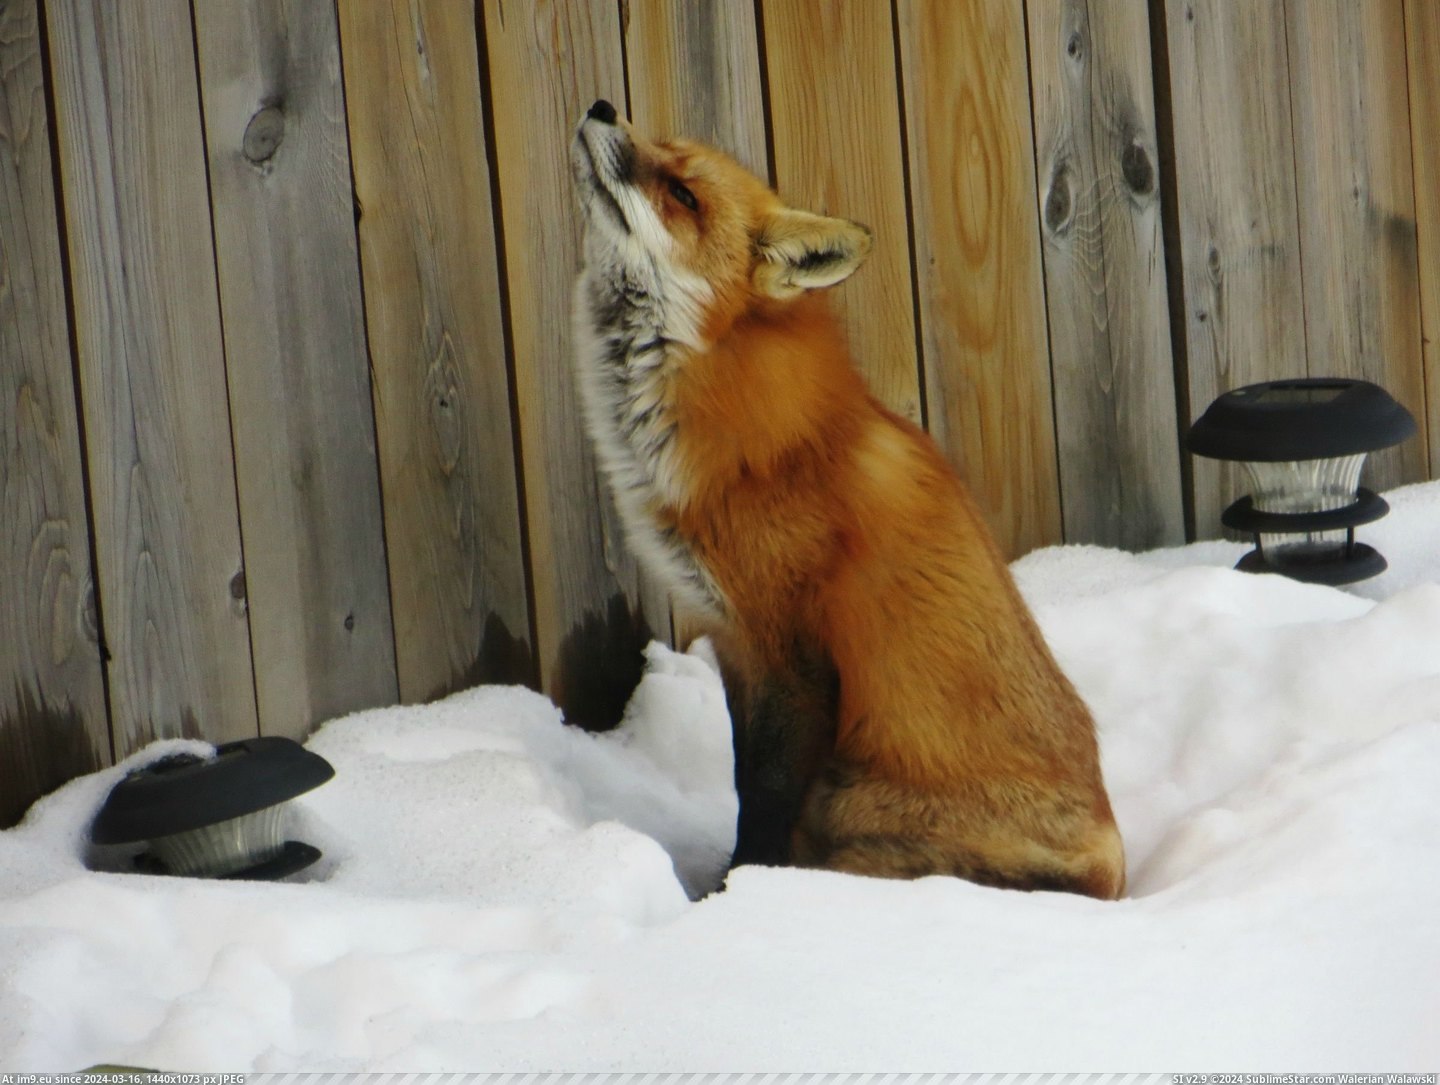 #Red #Canada #Alberta #Backyard #Fox #Sleeping [Pics] Red fox sleeping in my backyard! Alberta, Canada. 3 Pic. (Obraz z album My r/PICS favs))